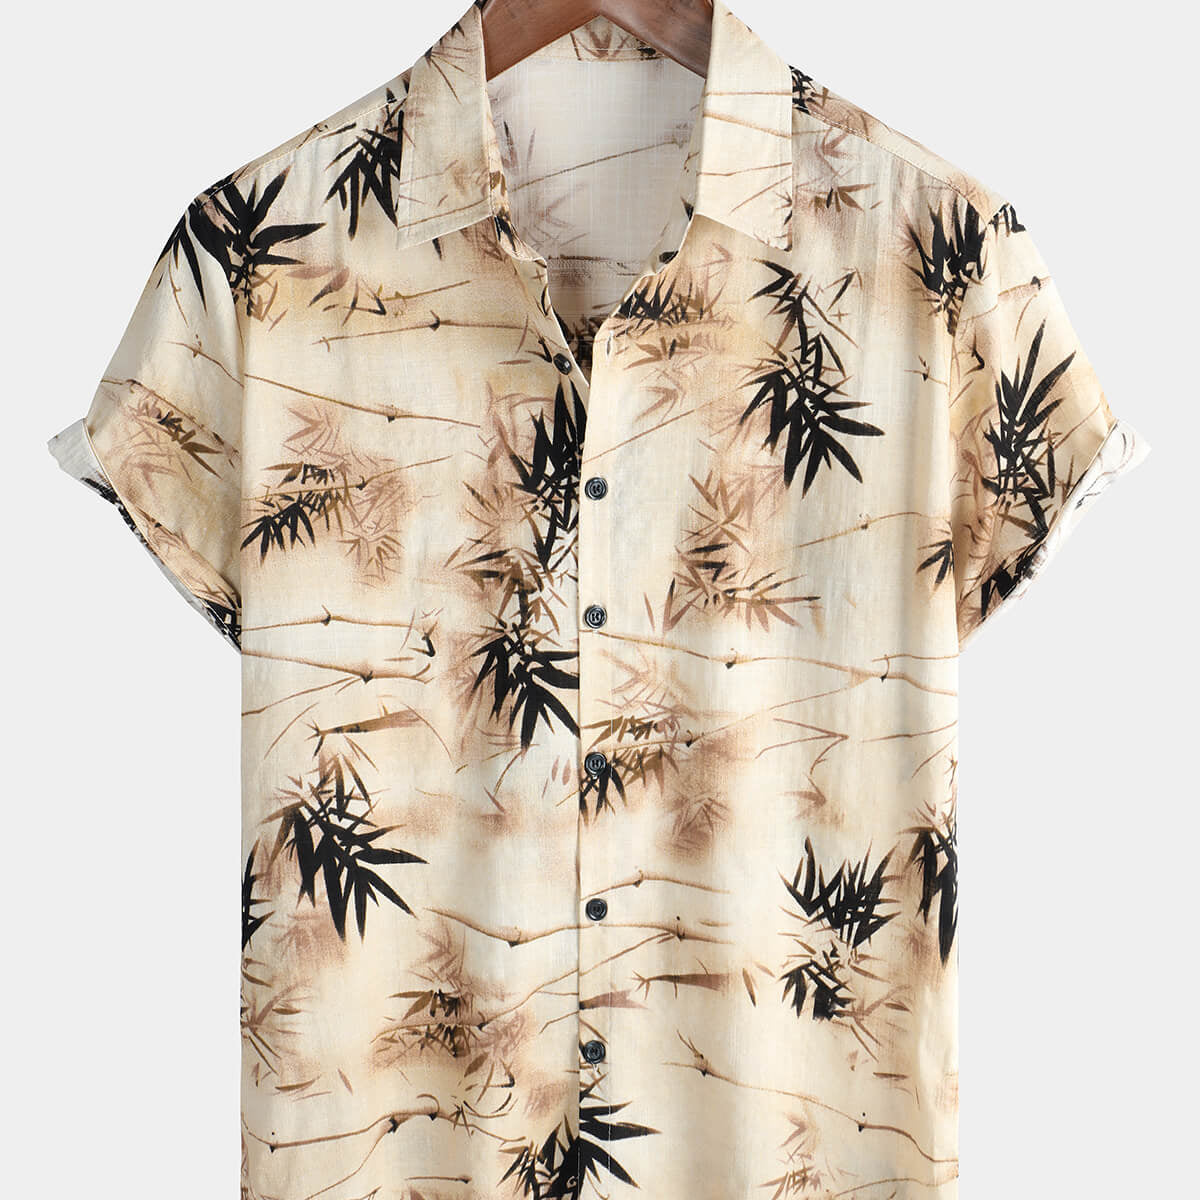 Men's Casual Short Sleeve Bamboo Holiday Cotton Vintage Shirt